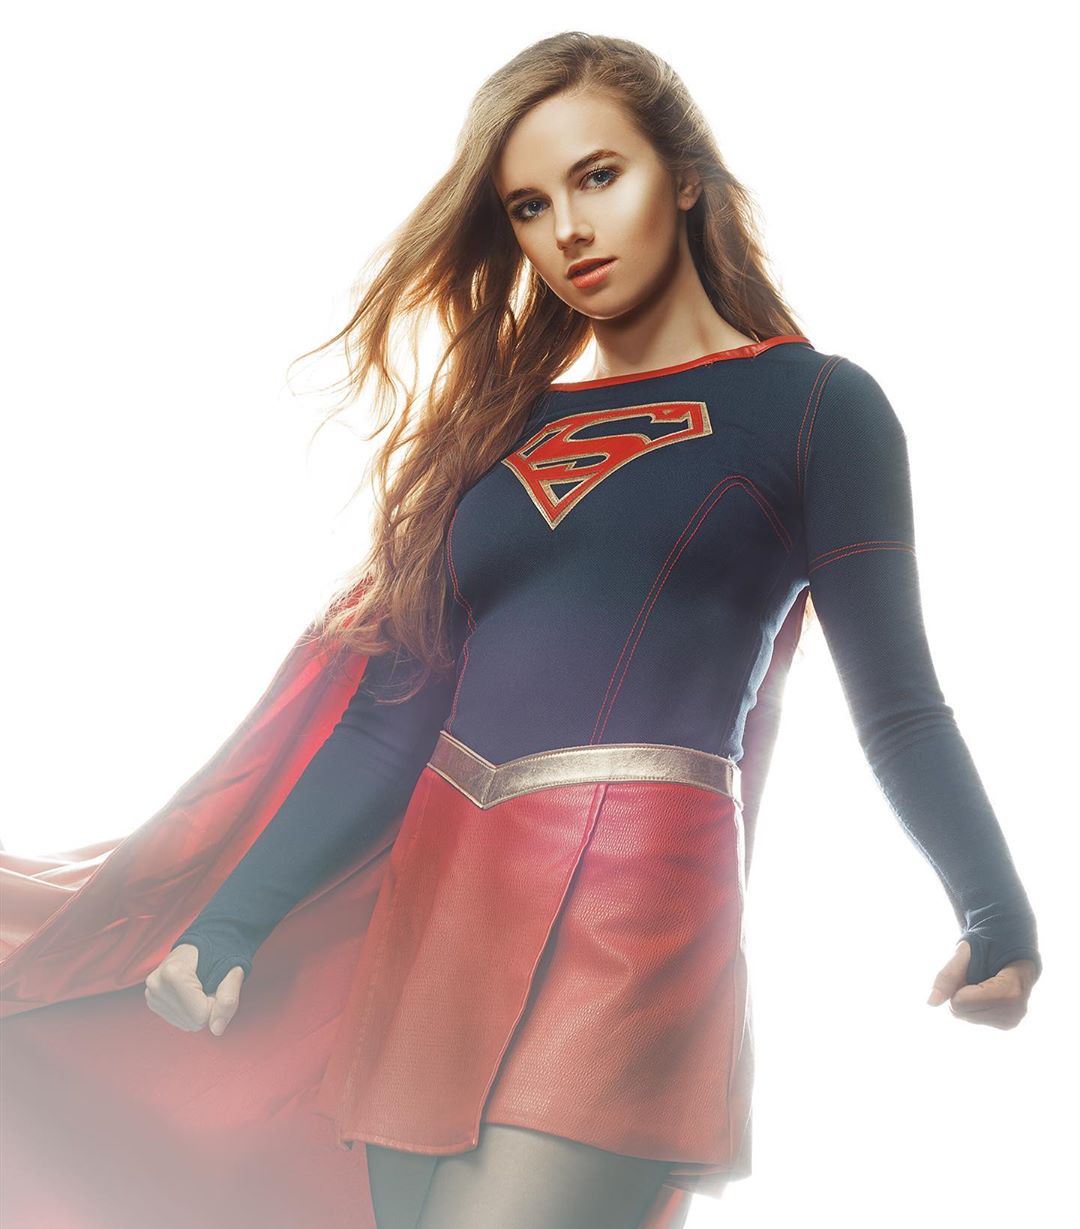 Cosplay supergirl 